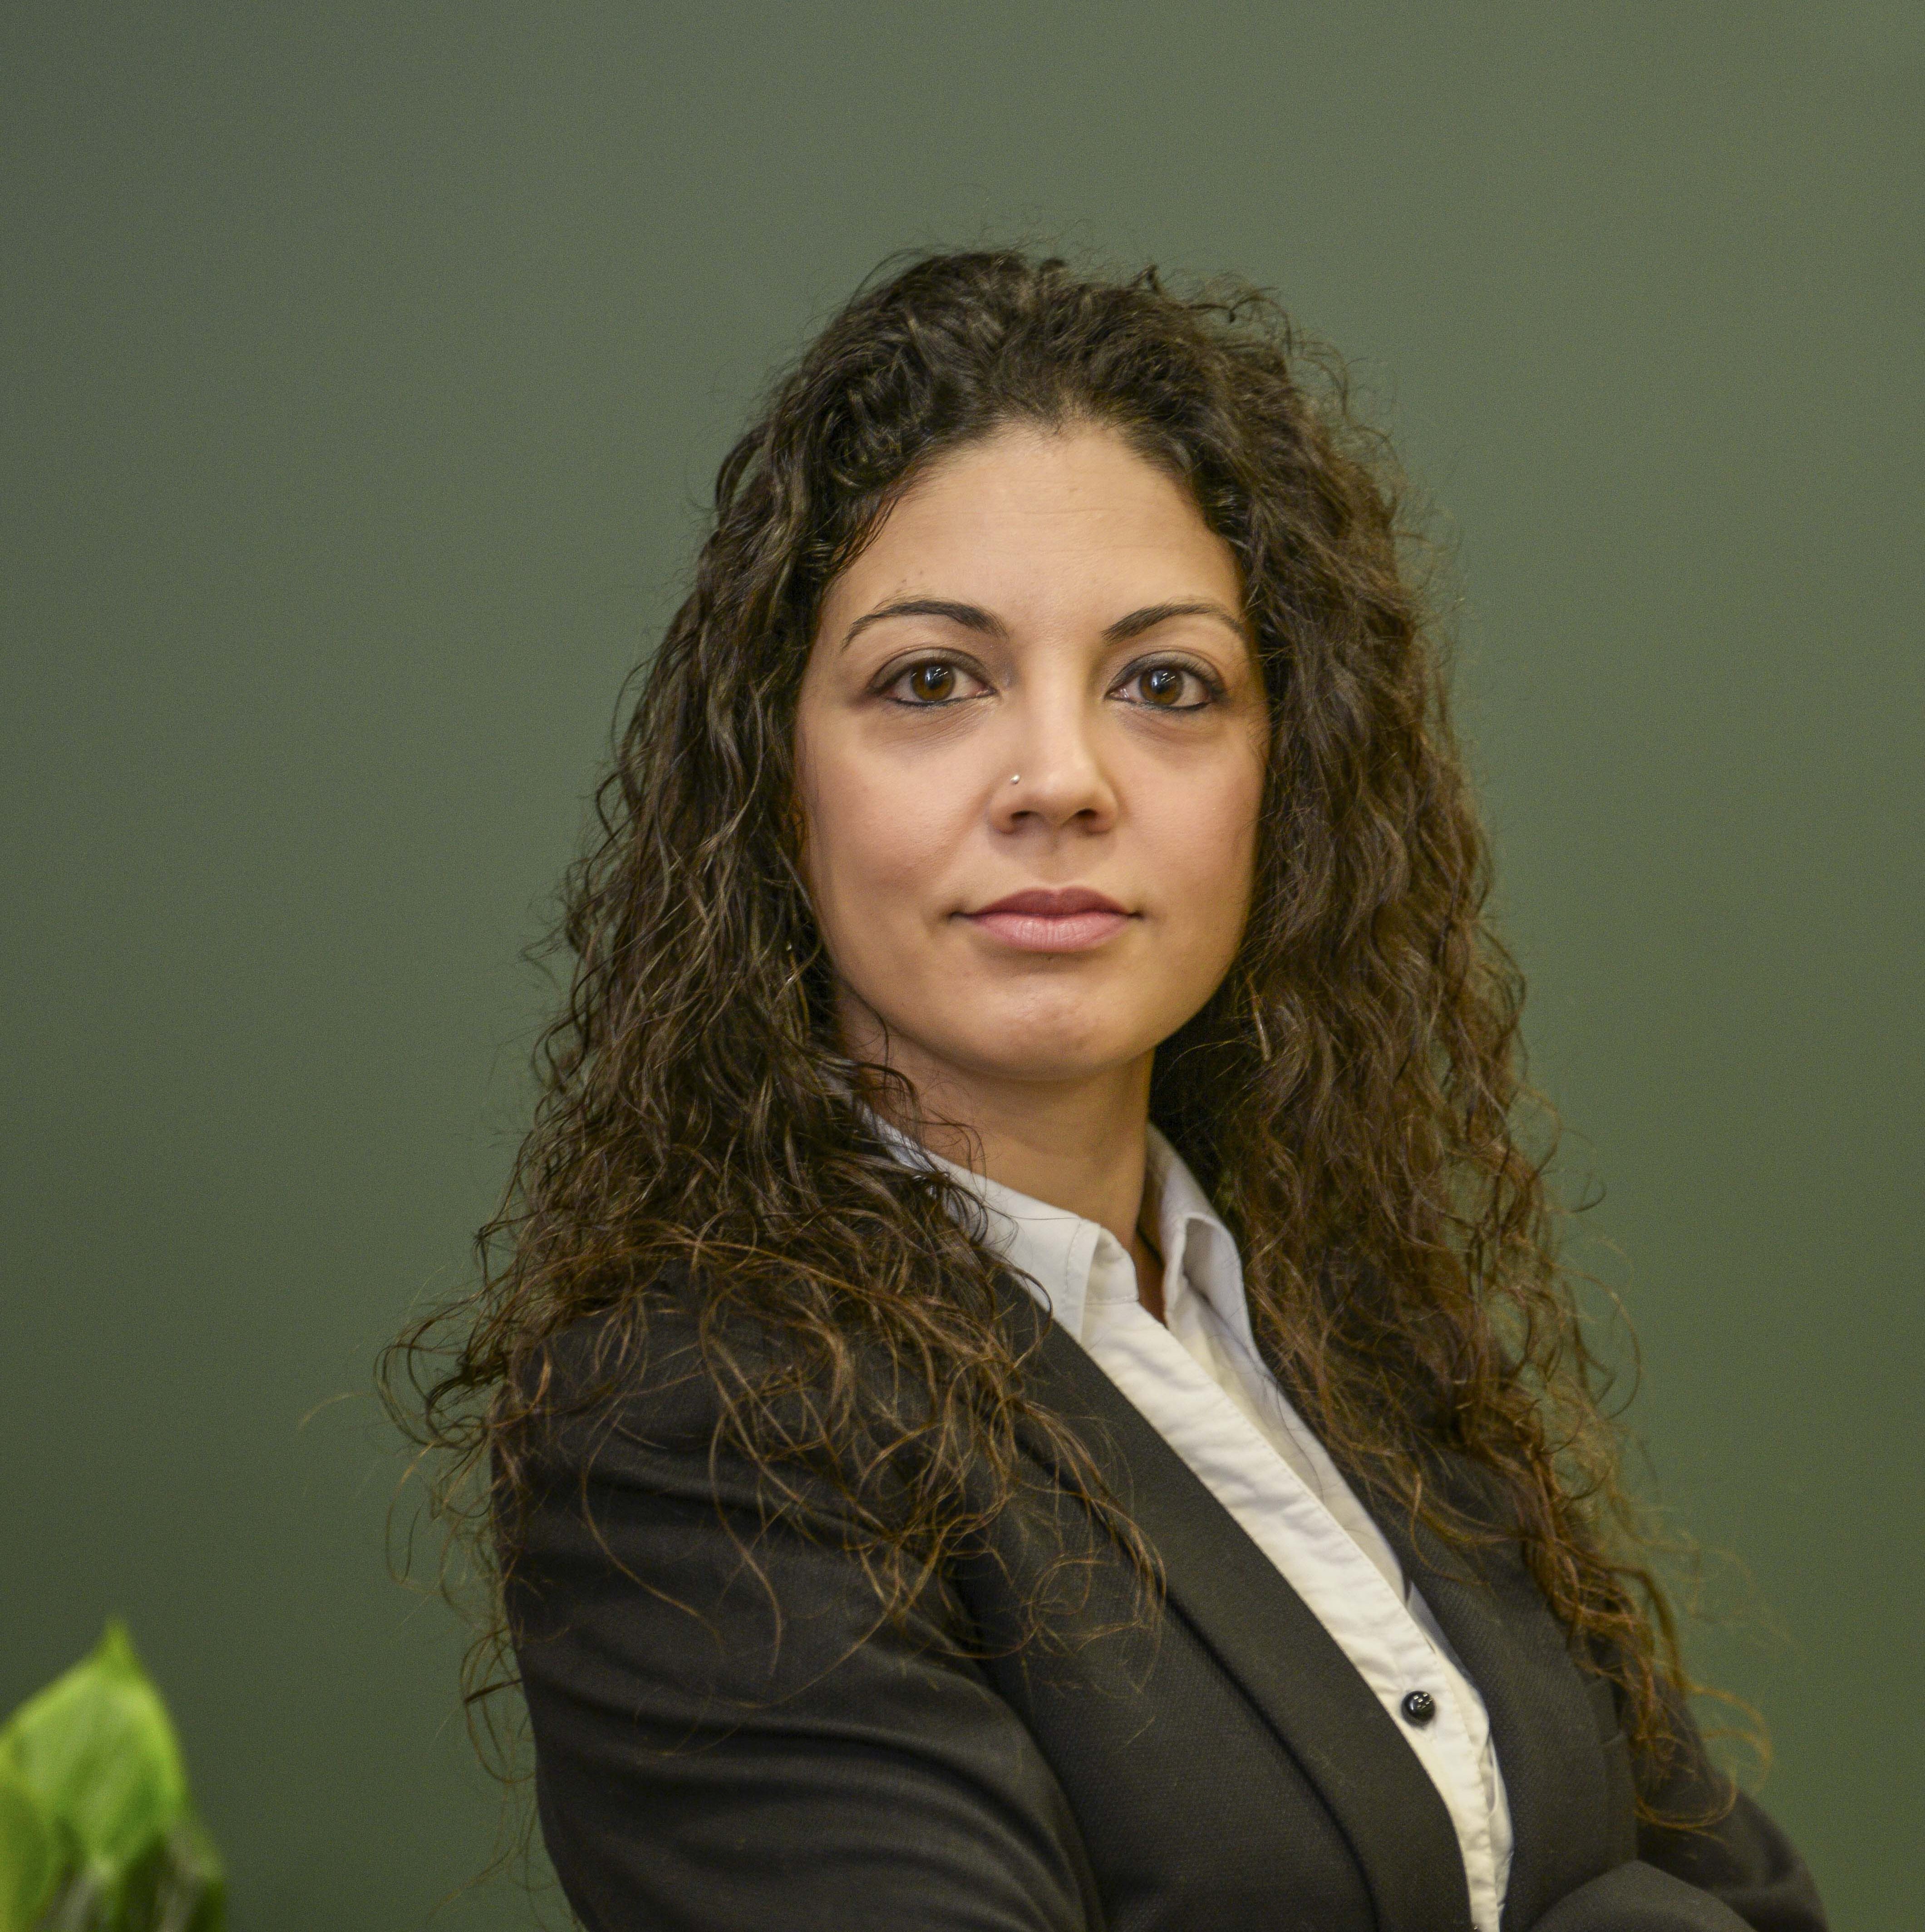 Dr. Araceli Venegas-Gomez
CEO & Founder
QURECA